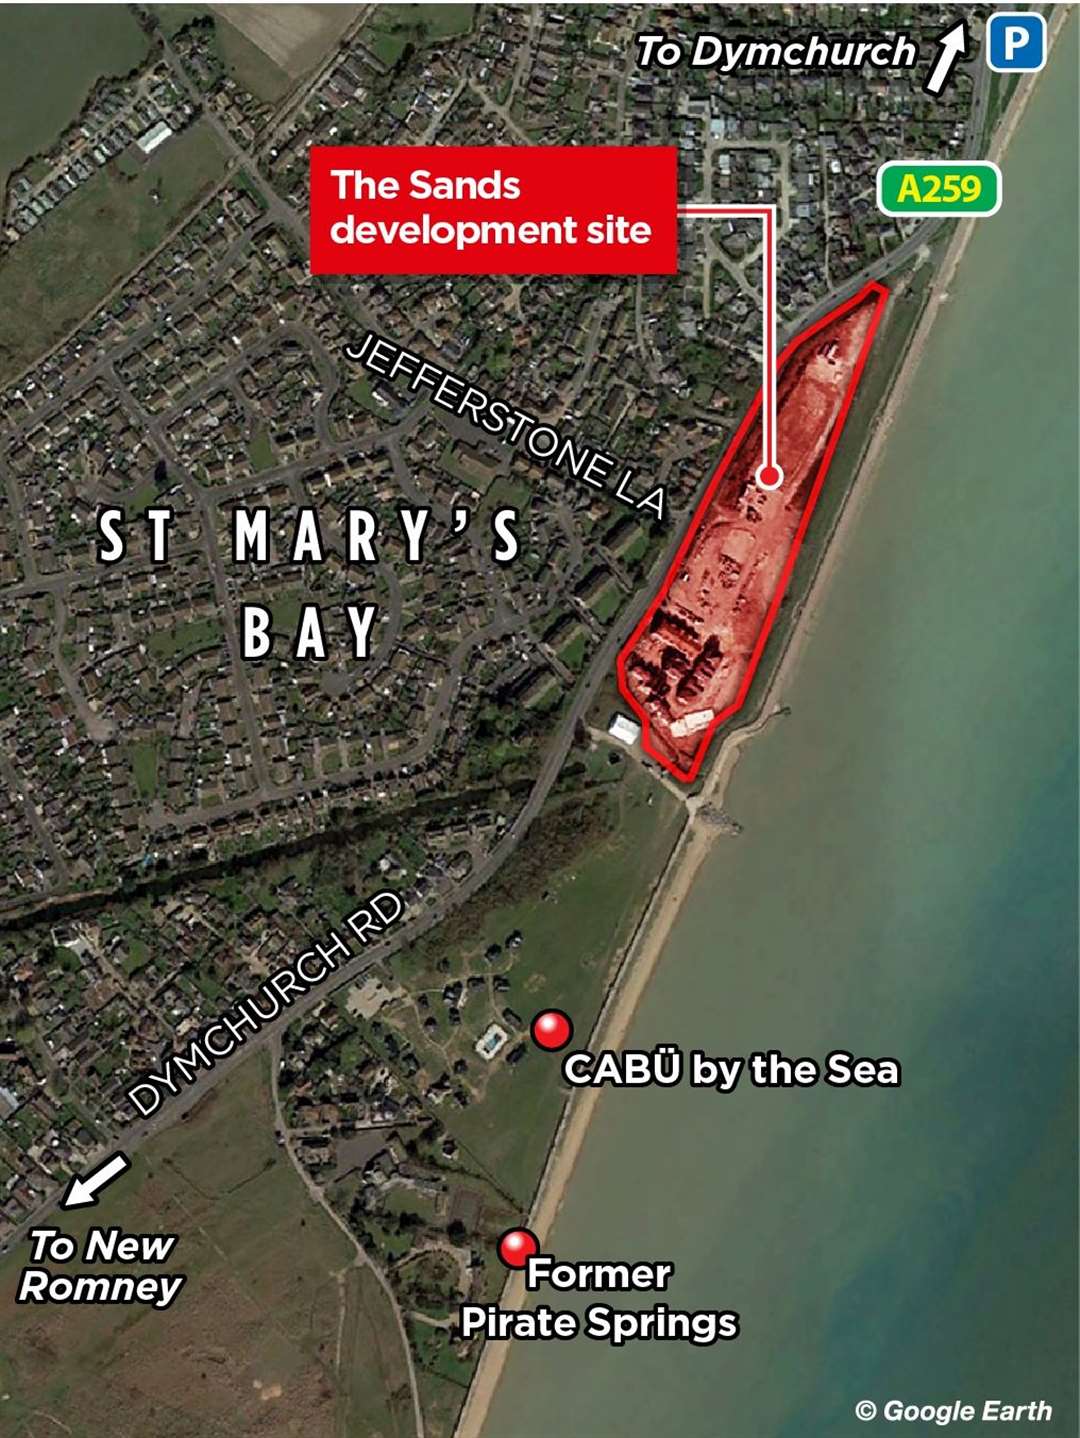 St Mary’s Bay sits between Dymchurch and Littlestone on Romney Marsh